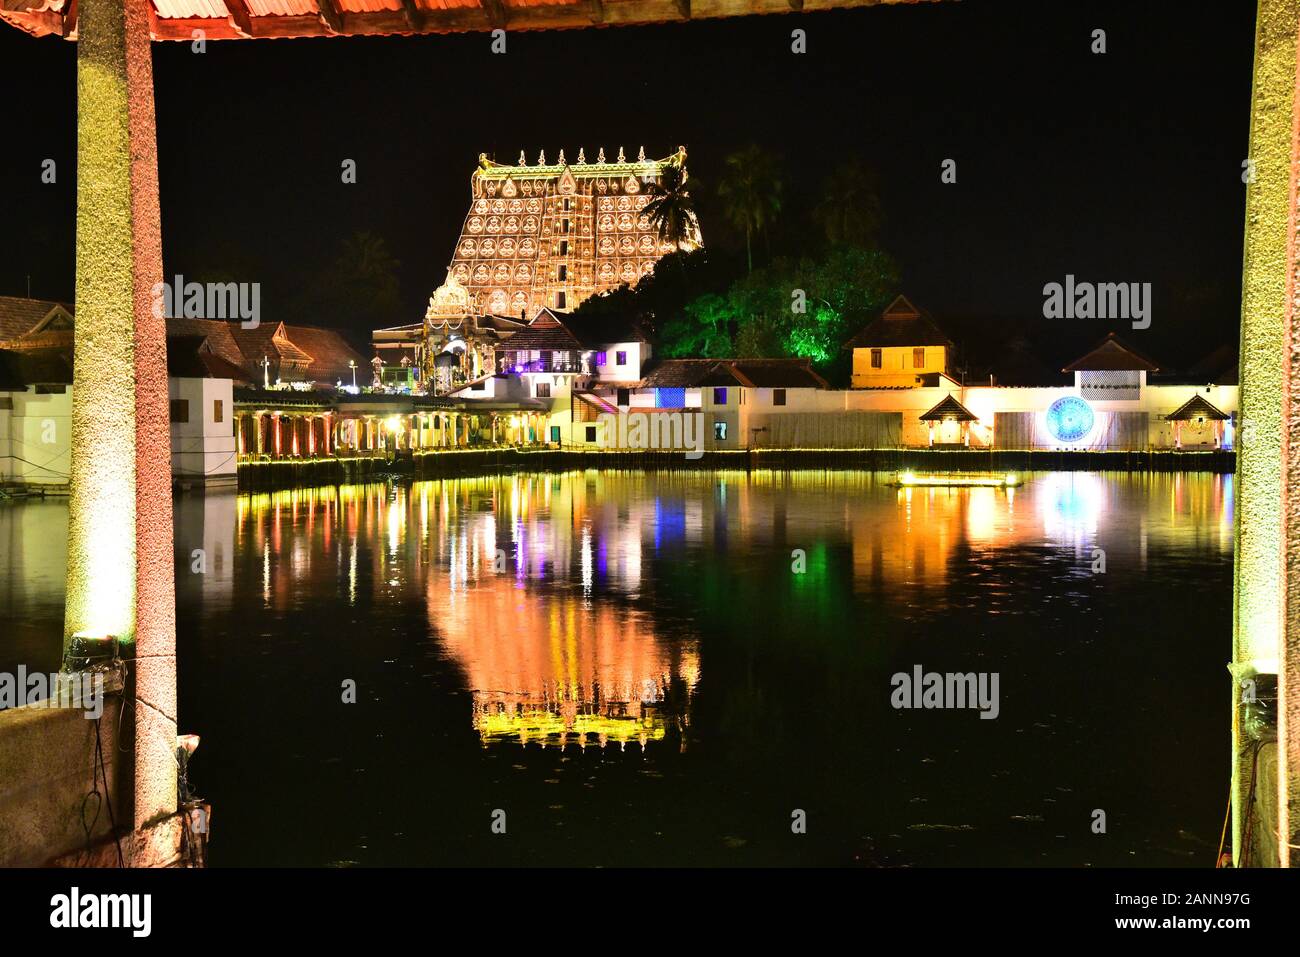 Sree padmanabhaswamy temple et padmatheerham lakshadeepam,étang pendant la cérémonie de thiruvanantapuram,Kerala, Inde Banque D'Images